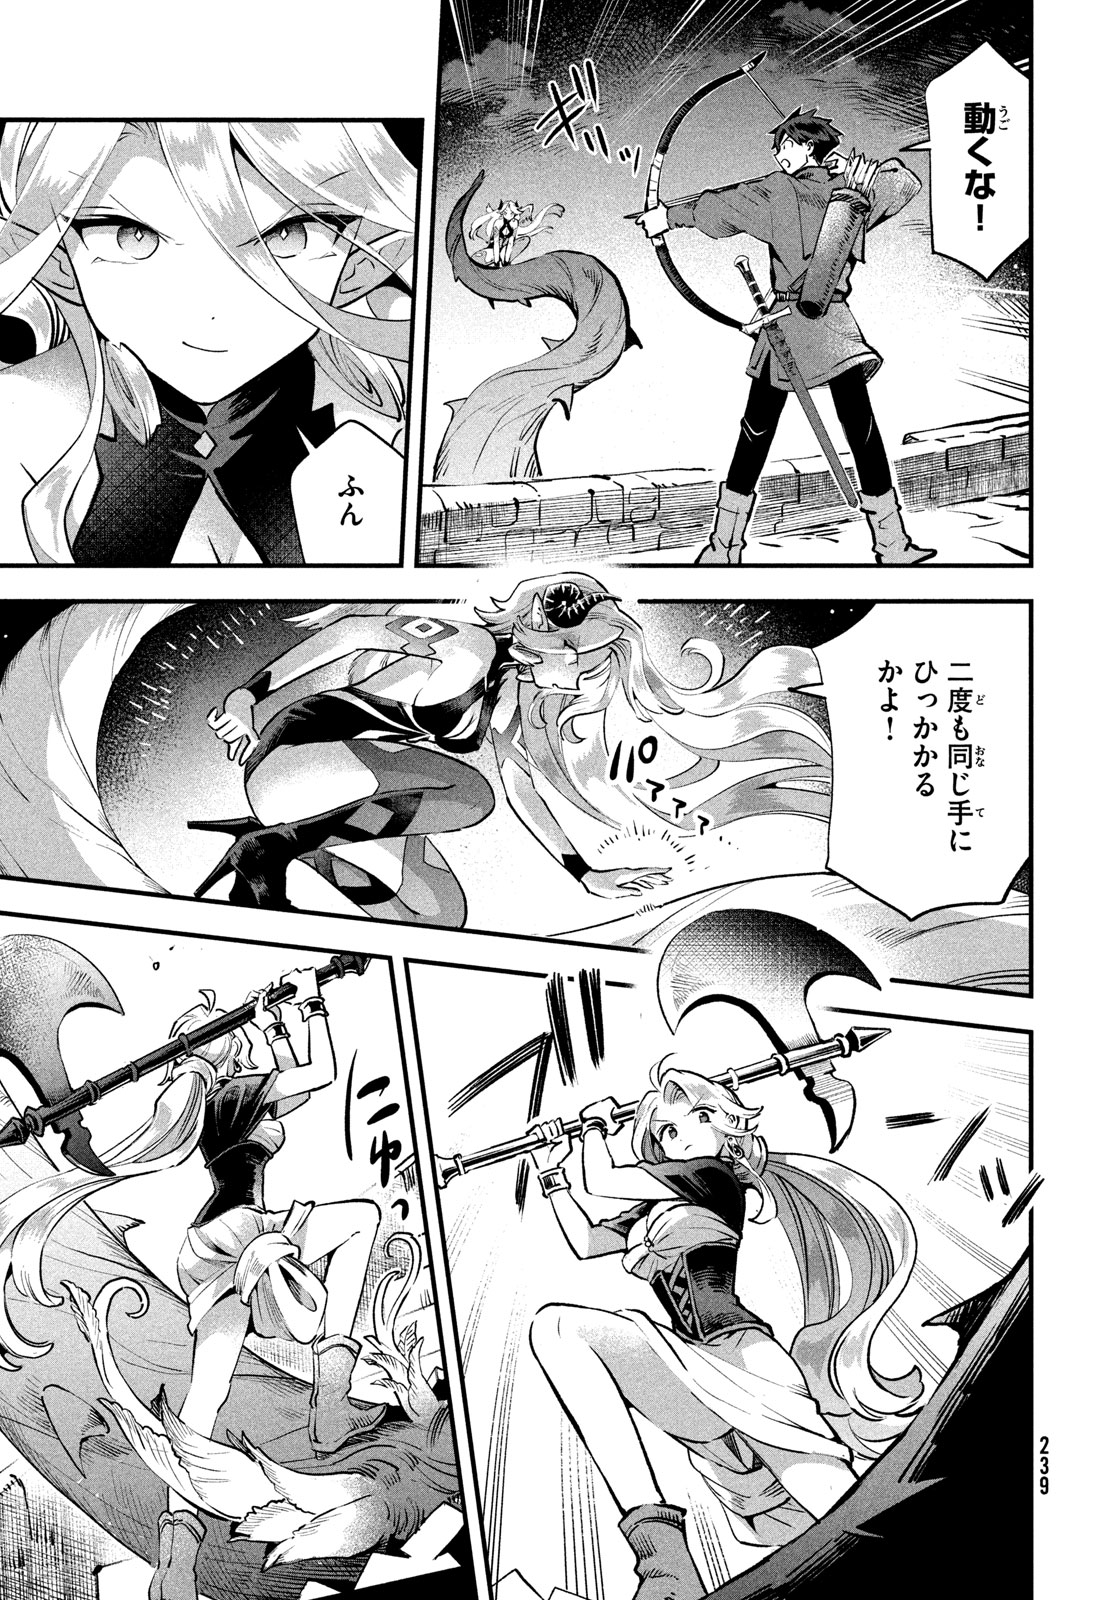 7-nin no Nemuri Hime - Chapter 46 - Page 13